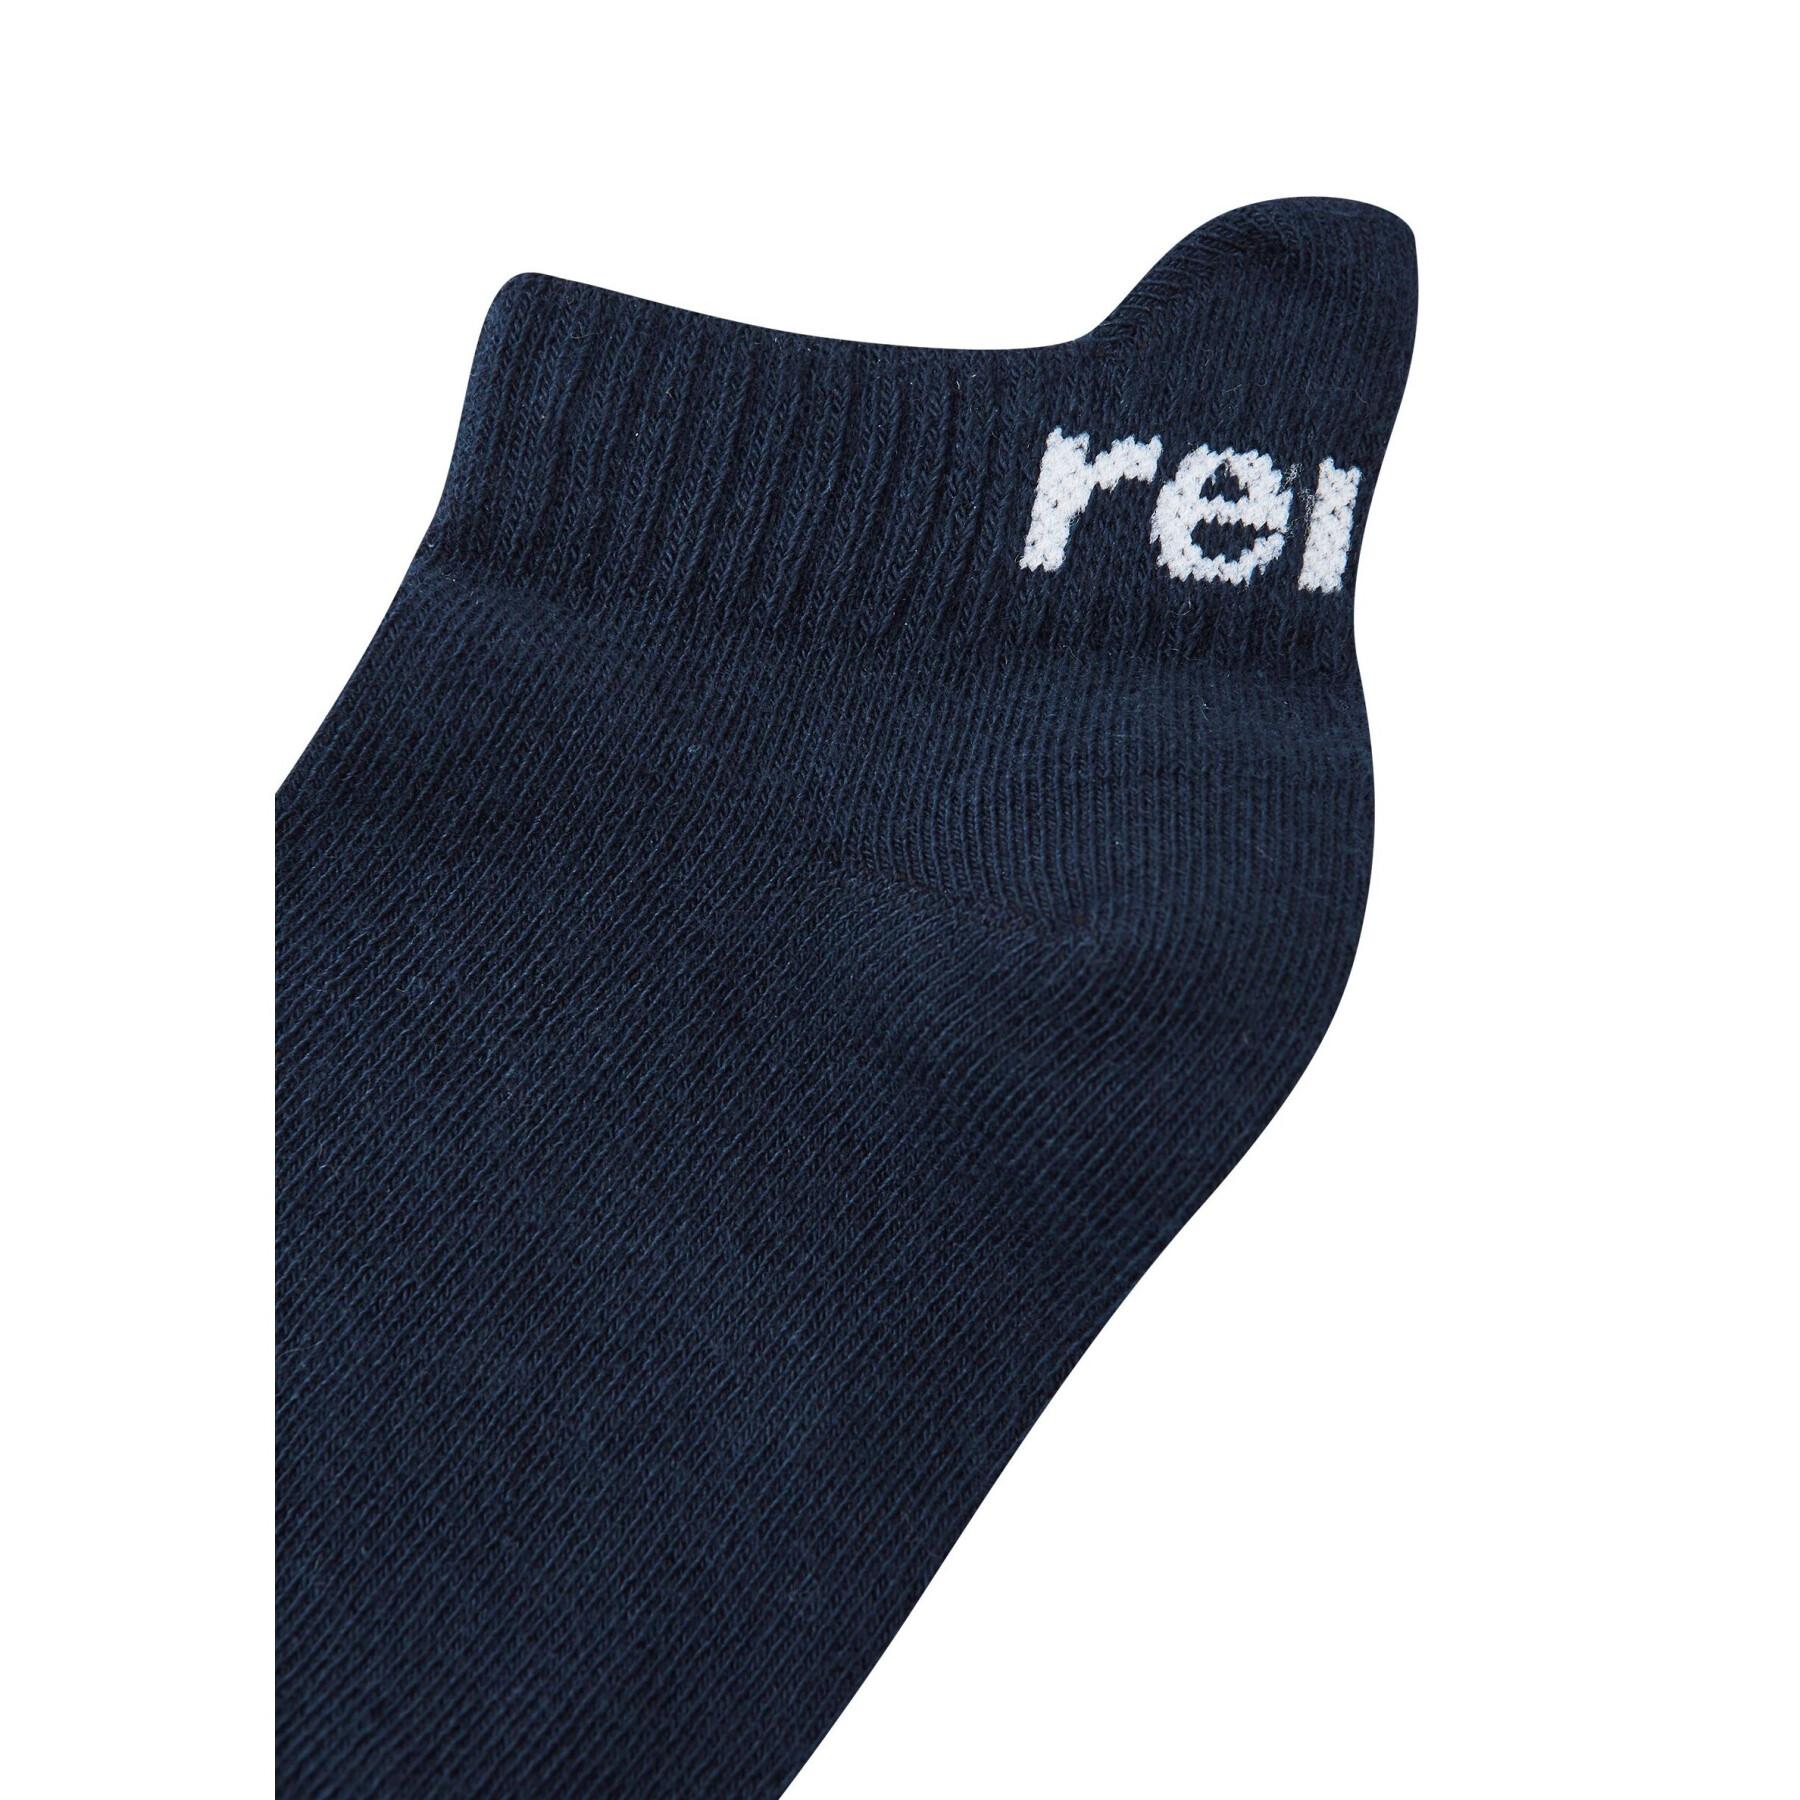 Children's socks Reima Vipellys